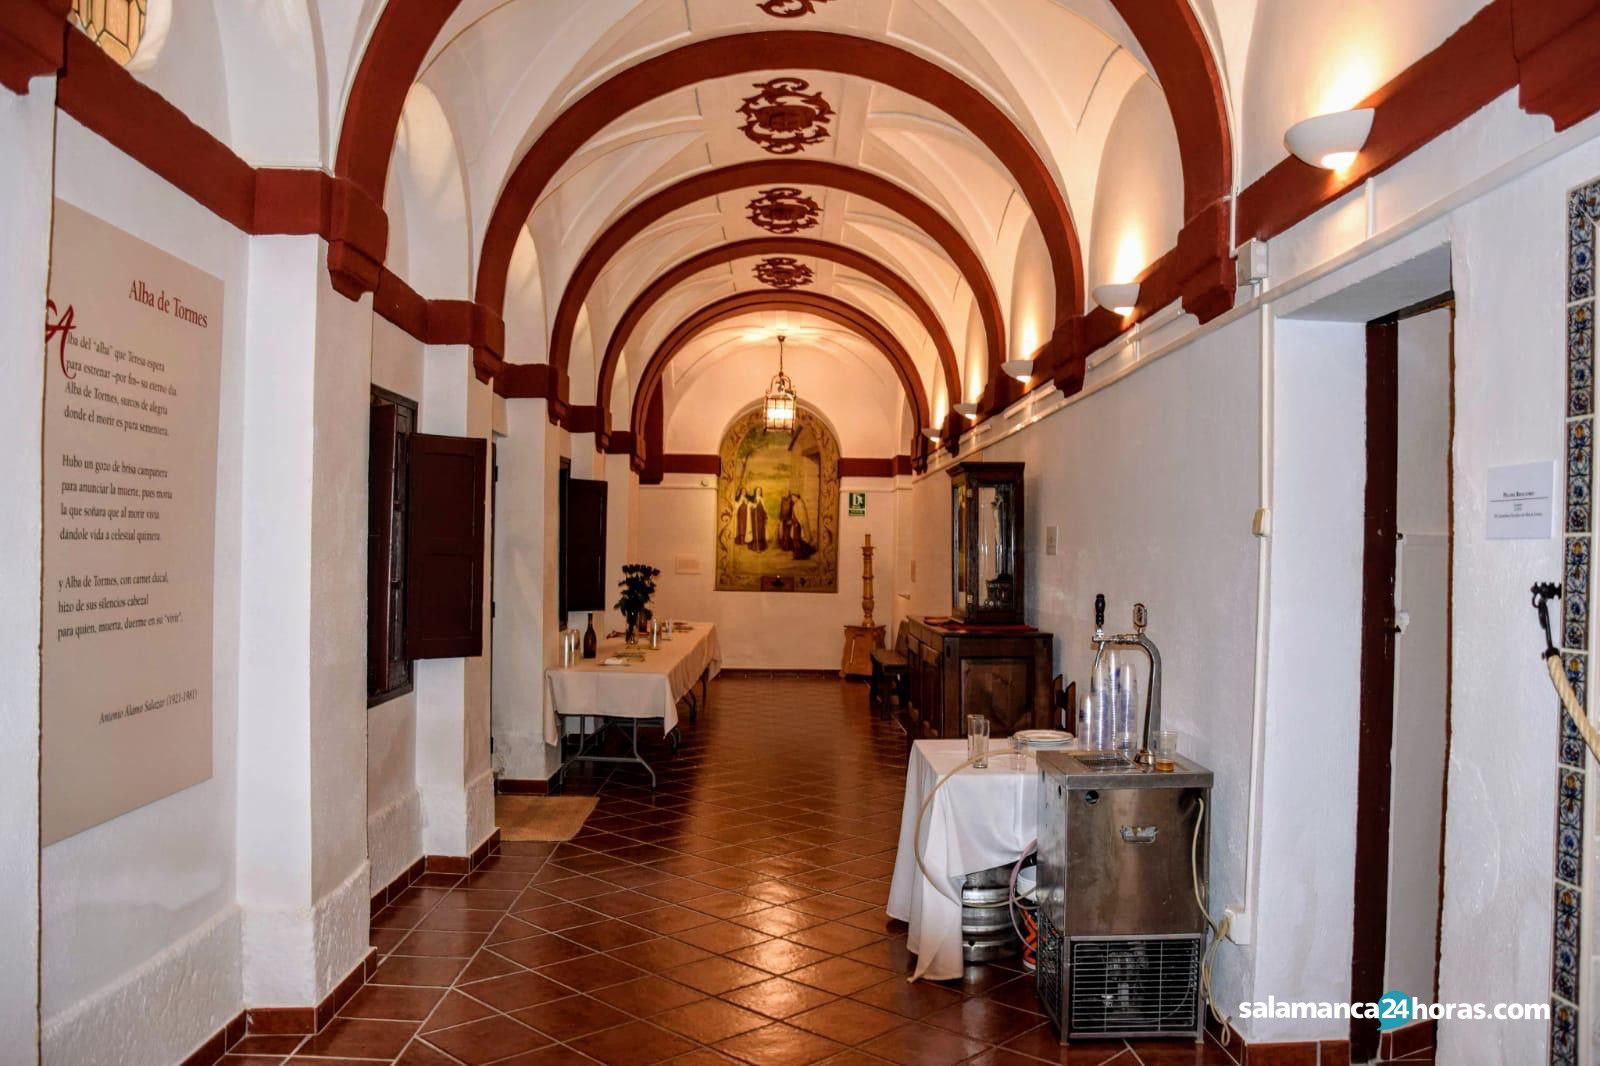  Convento carmelita de Alba de Tormes  (2) 